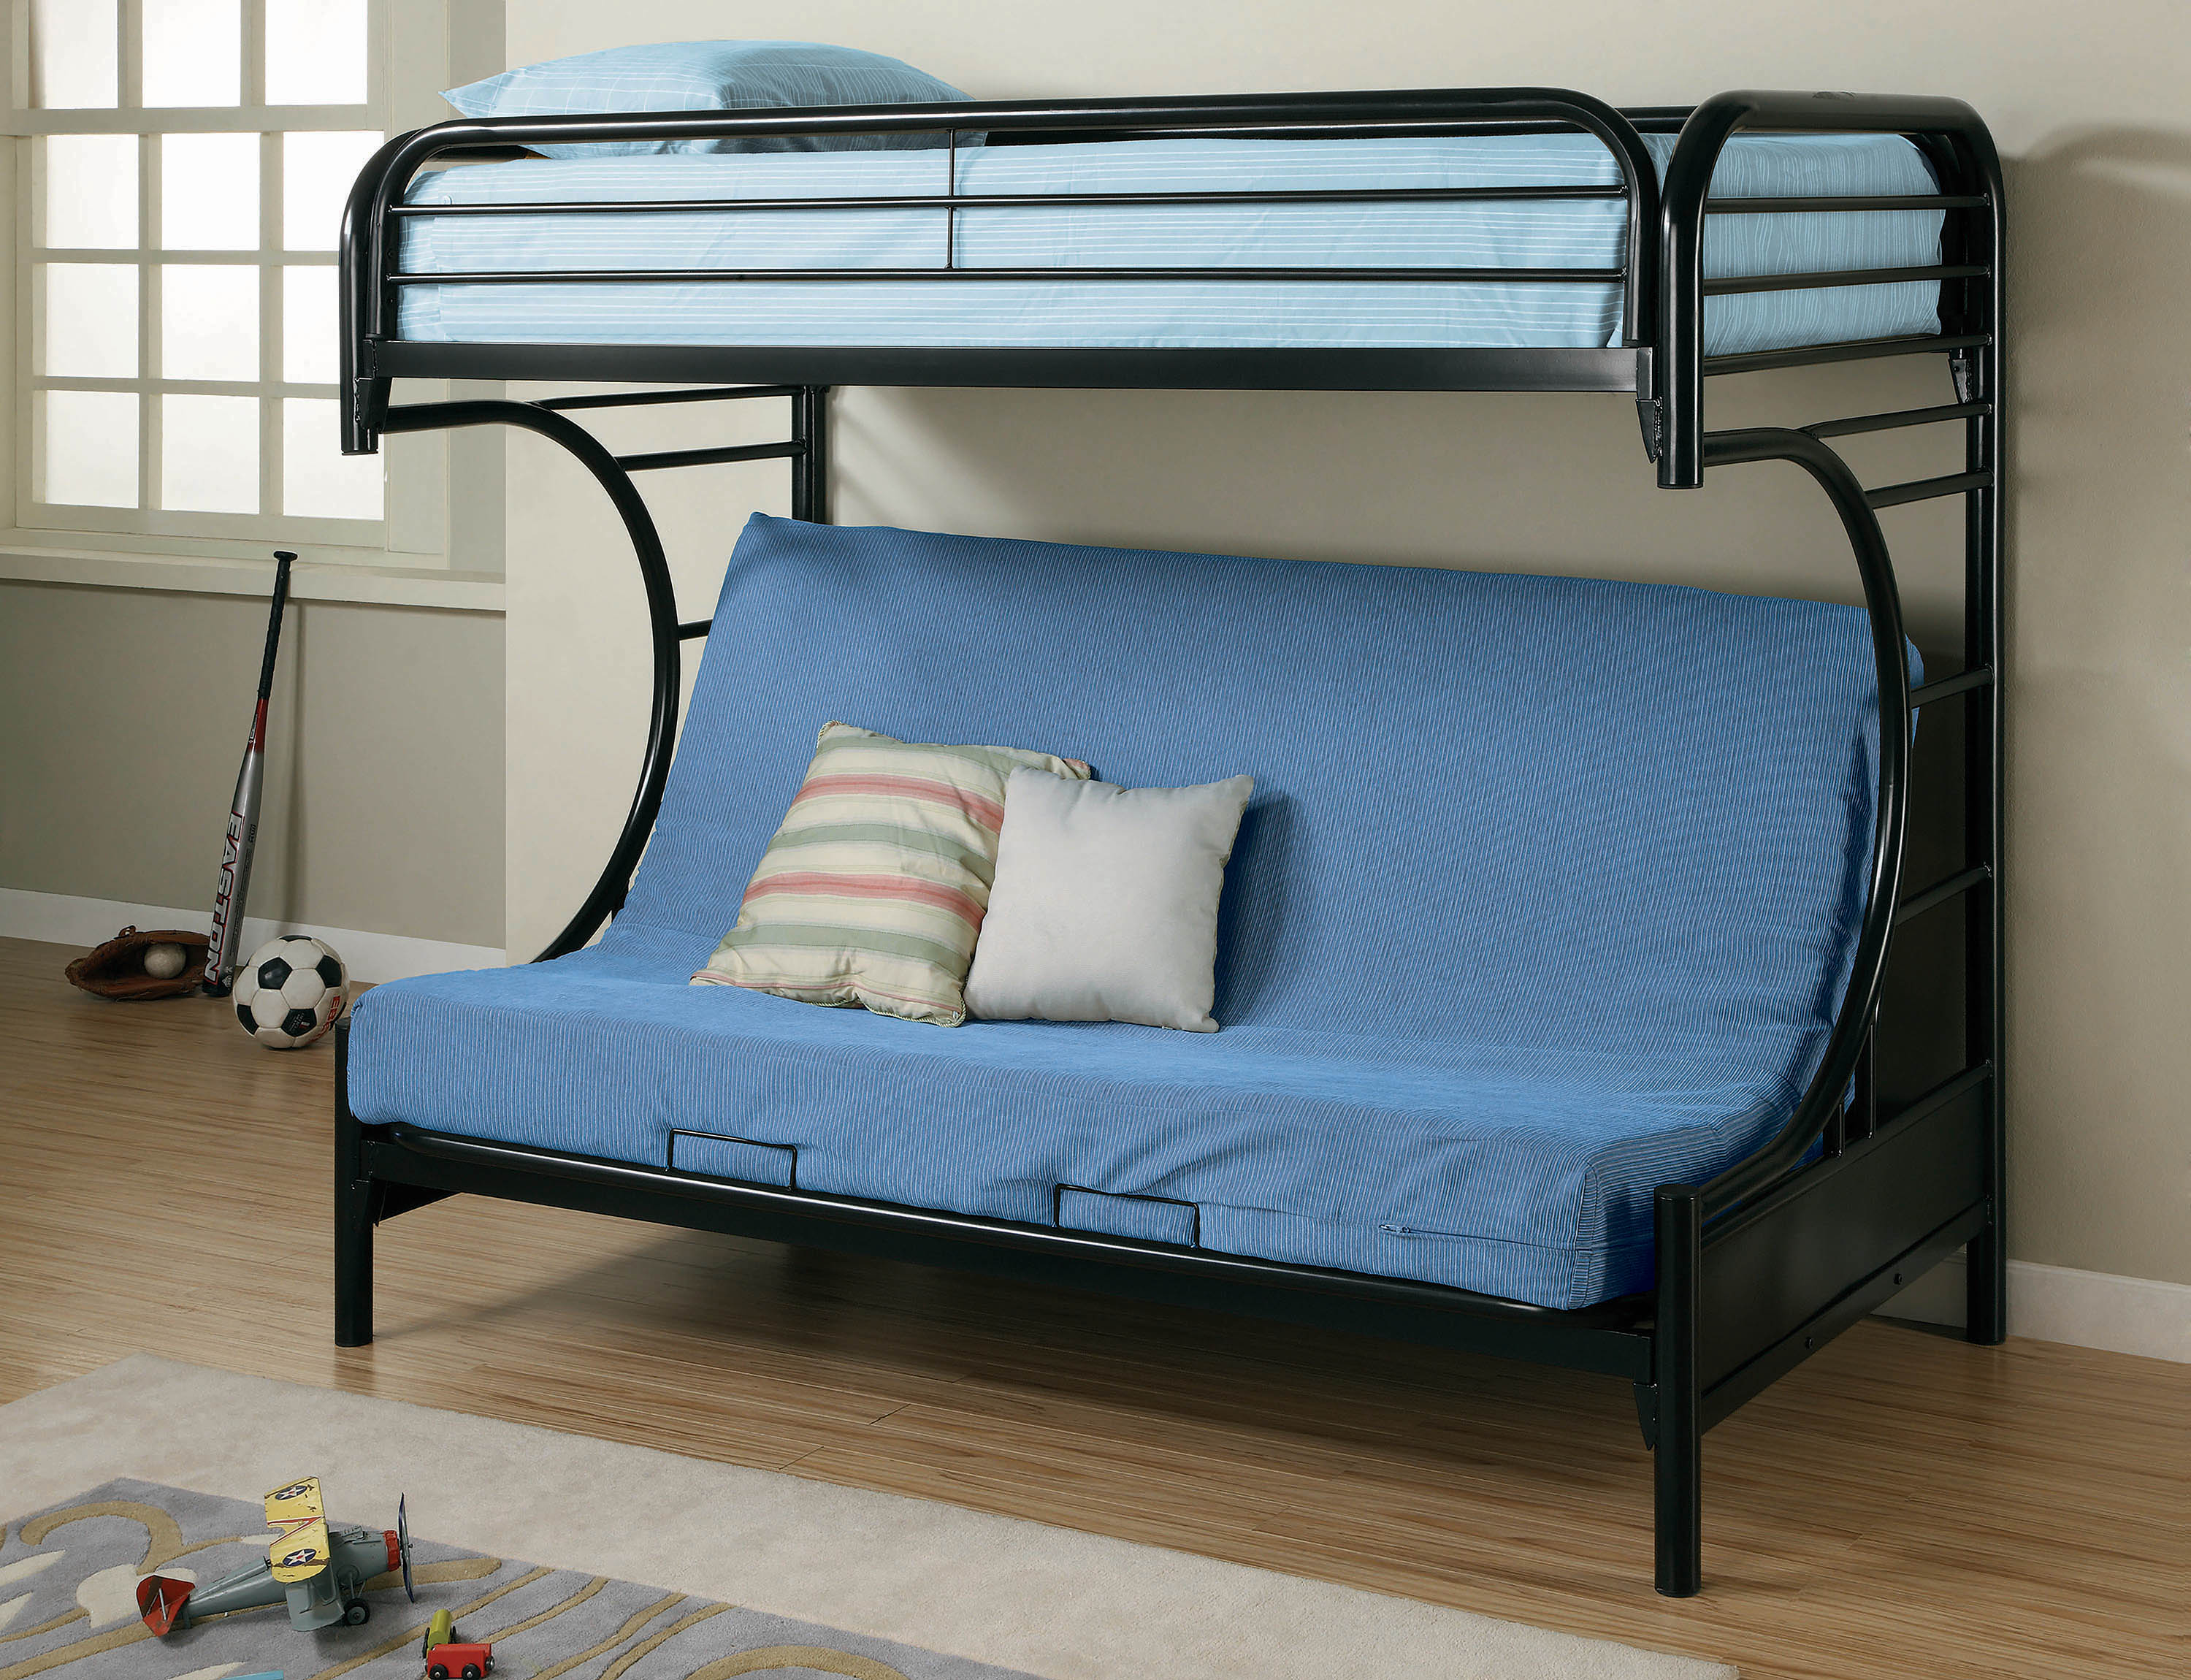 Montgomey Contemporary Glossy Black Futon Bunk Bed by Coaster